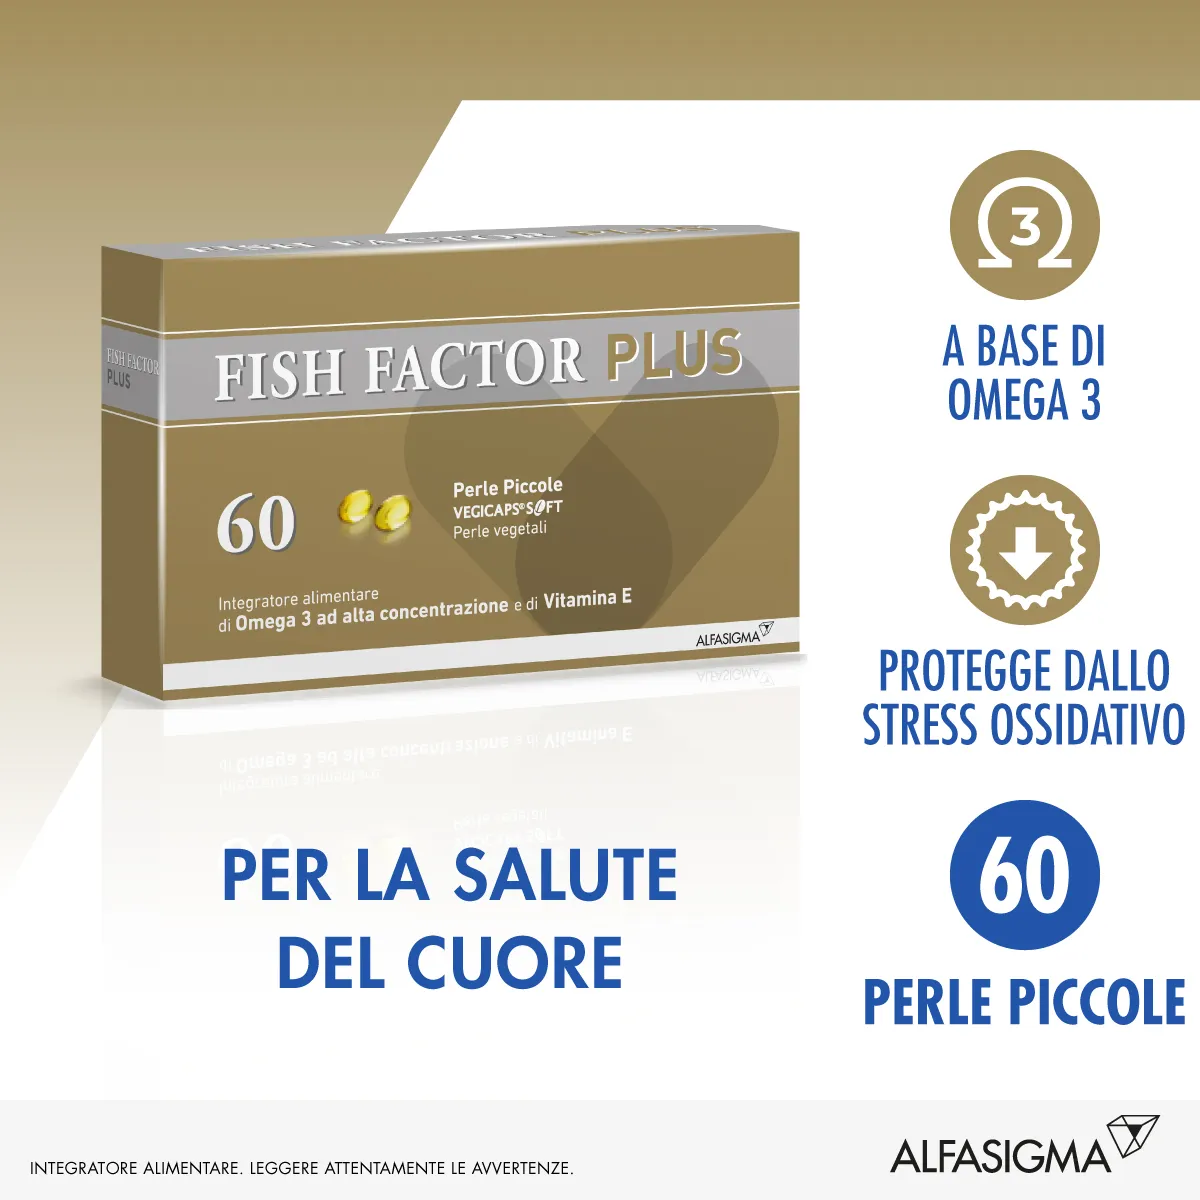 Fish Factor Plus 60 Perle Piccole Metabolismo dei Lipidi